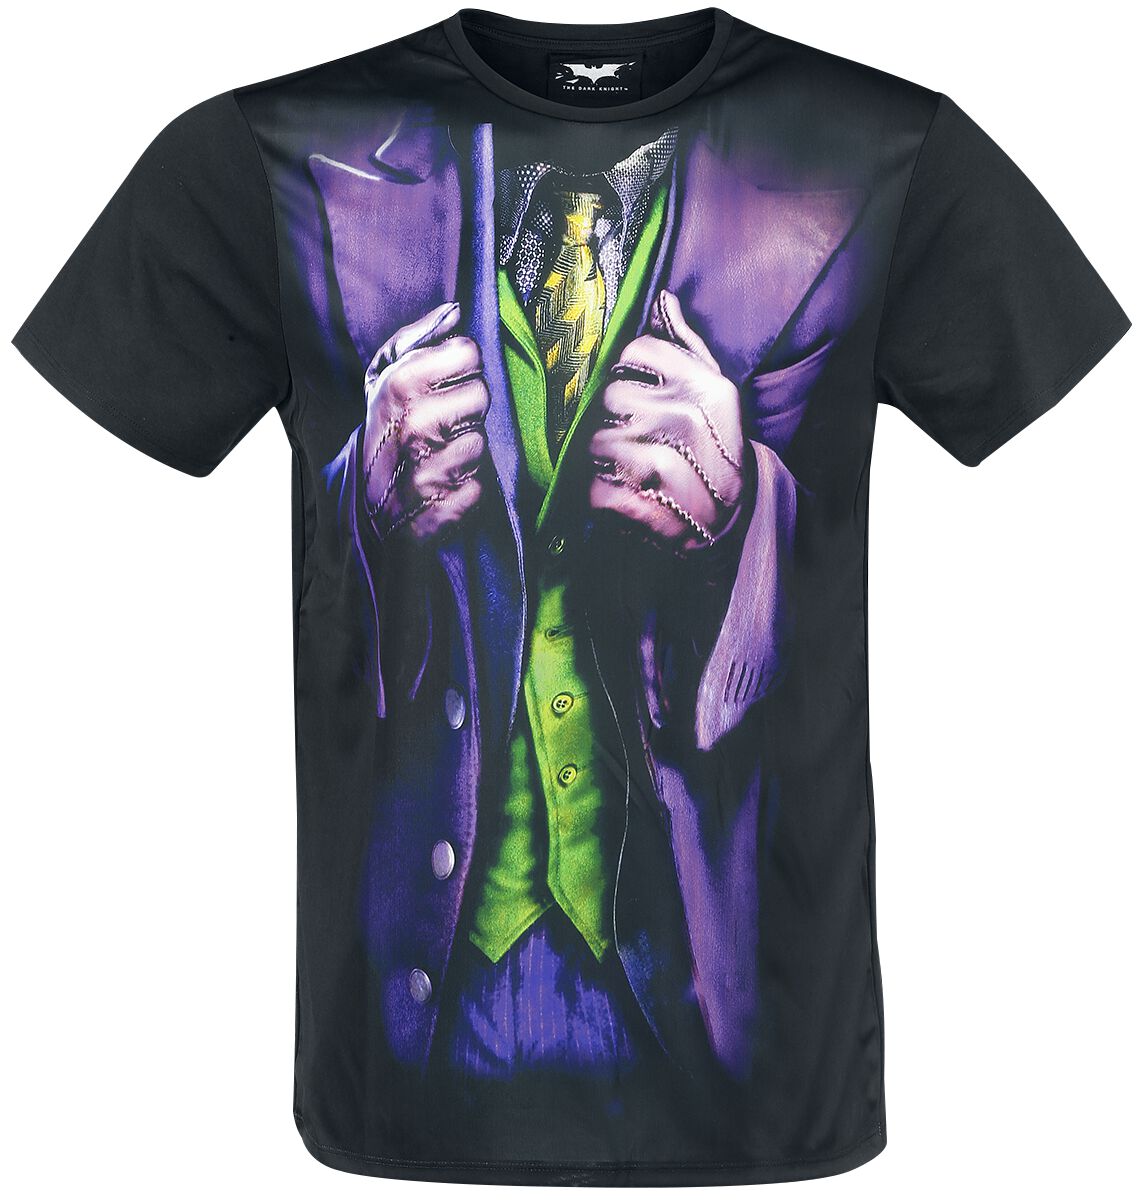 The Joker T-Shirt Buy online now